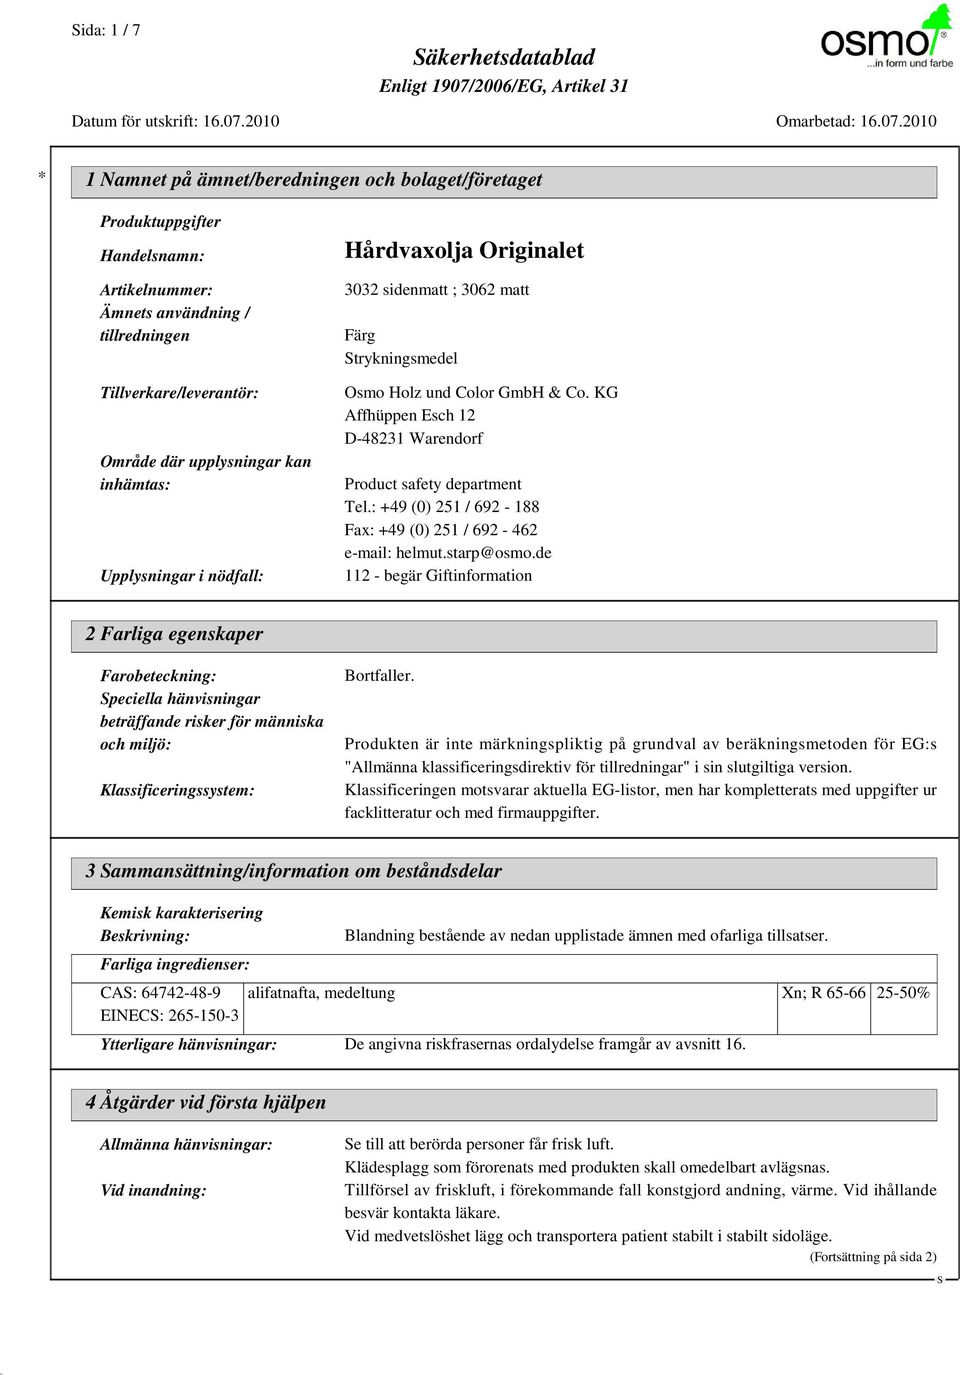 KG Affhüppen Esch 12 D-48231 Warendorf Product safety department Tel.: +49 (0) 251 / 692-188 Fax: +49 (0) 251 / 692-462 e-mail: helmut.starp@osmo.